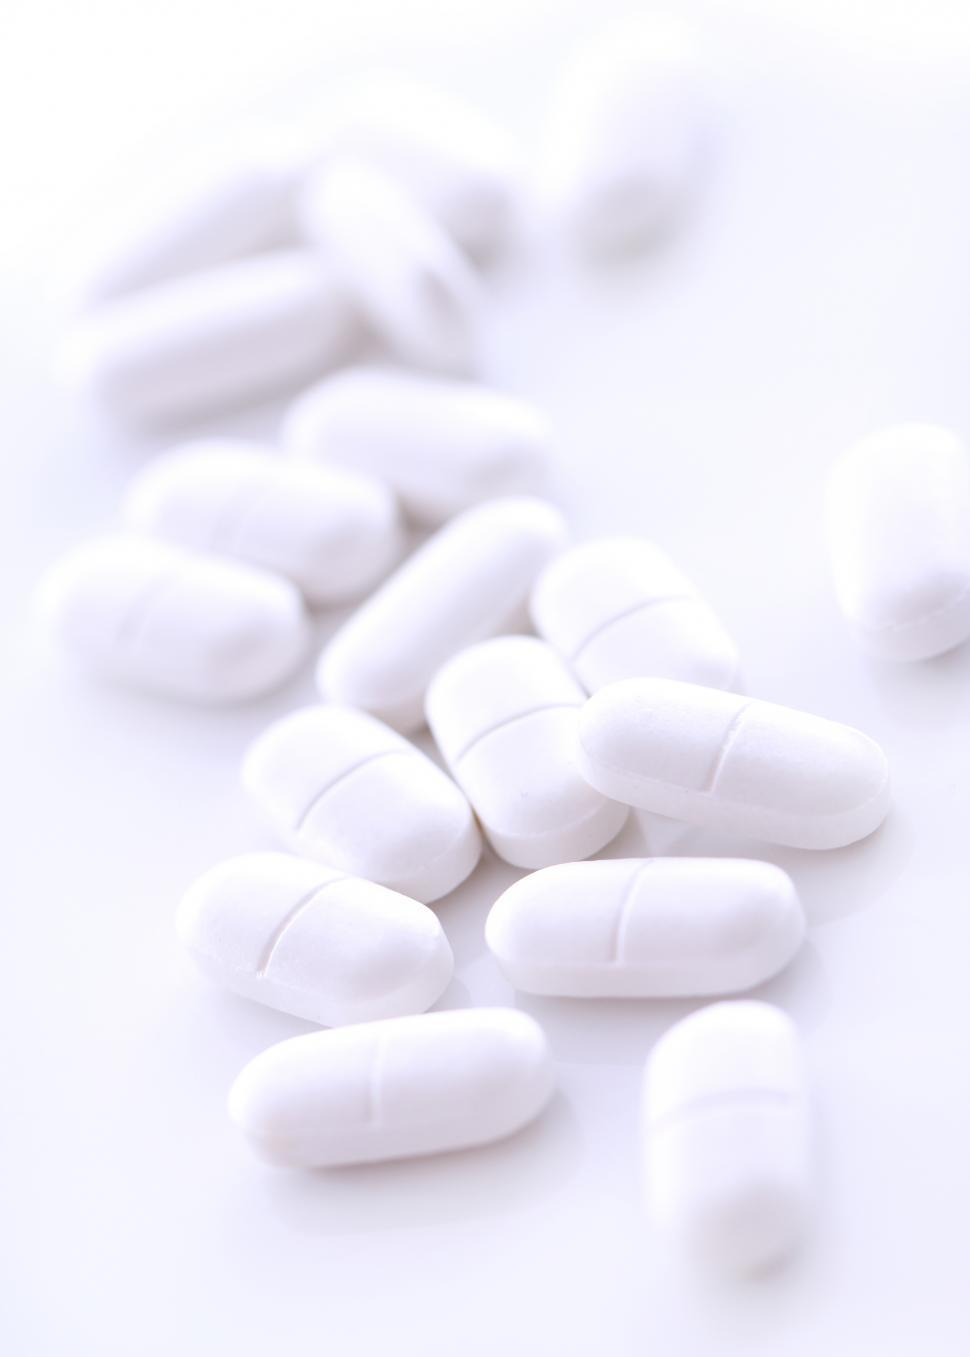 Free Image of White pills 